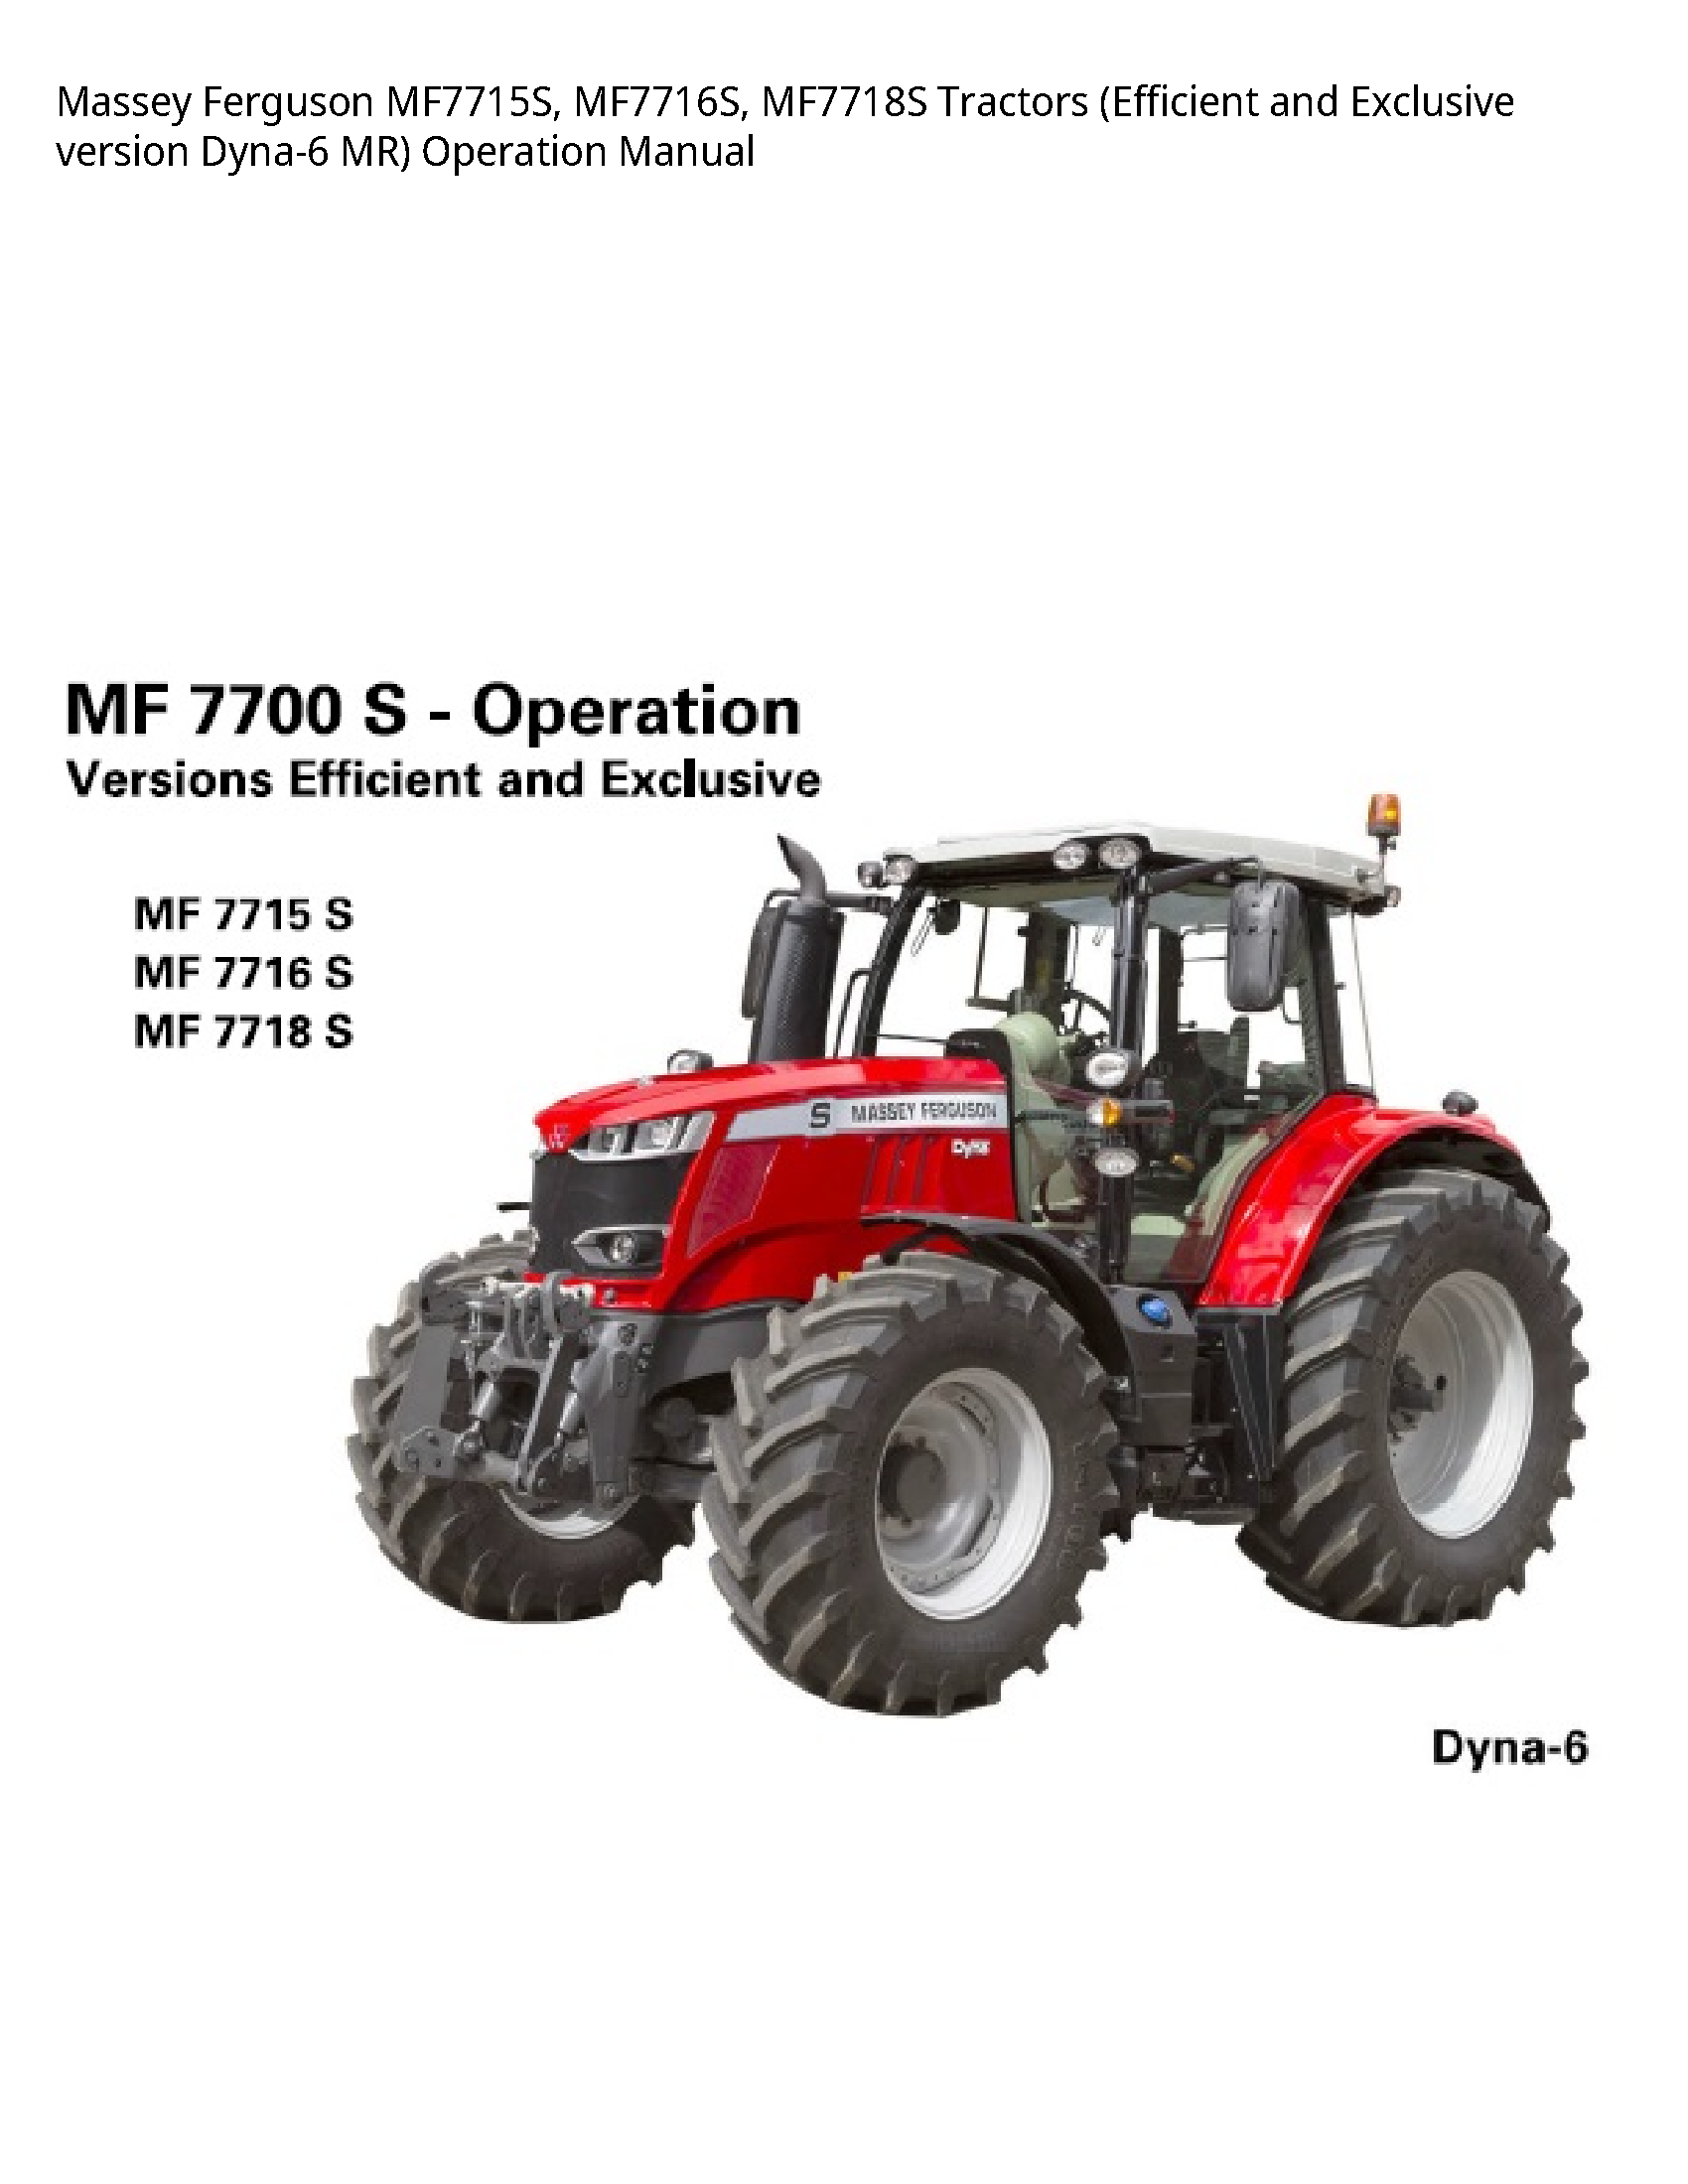 Massey Ferguson MF7715S Tractors (Efficient  Exclusive version MR) Operation manual